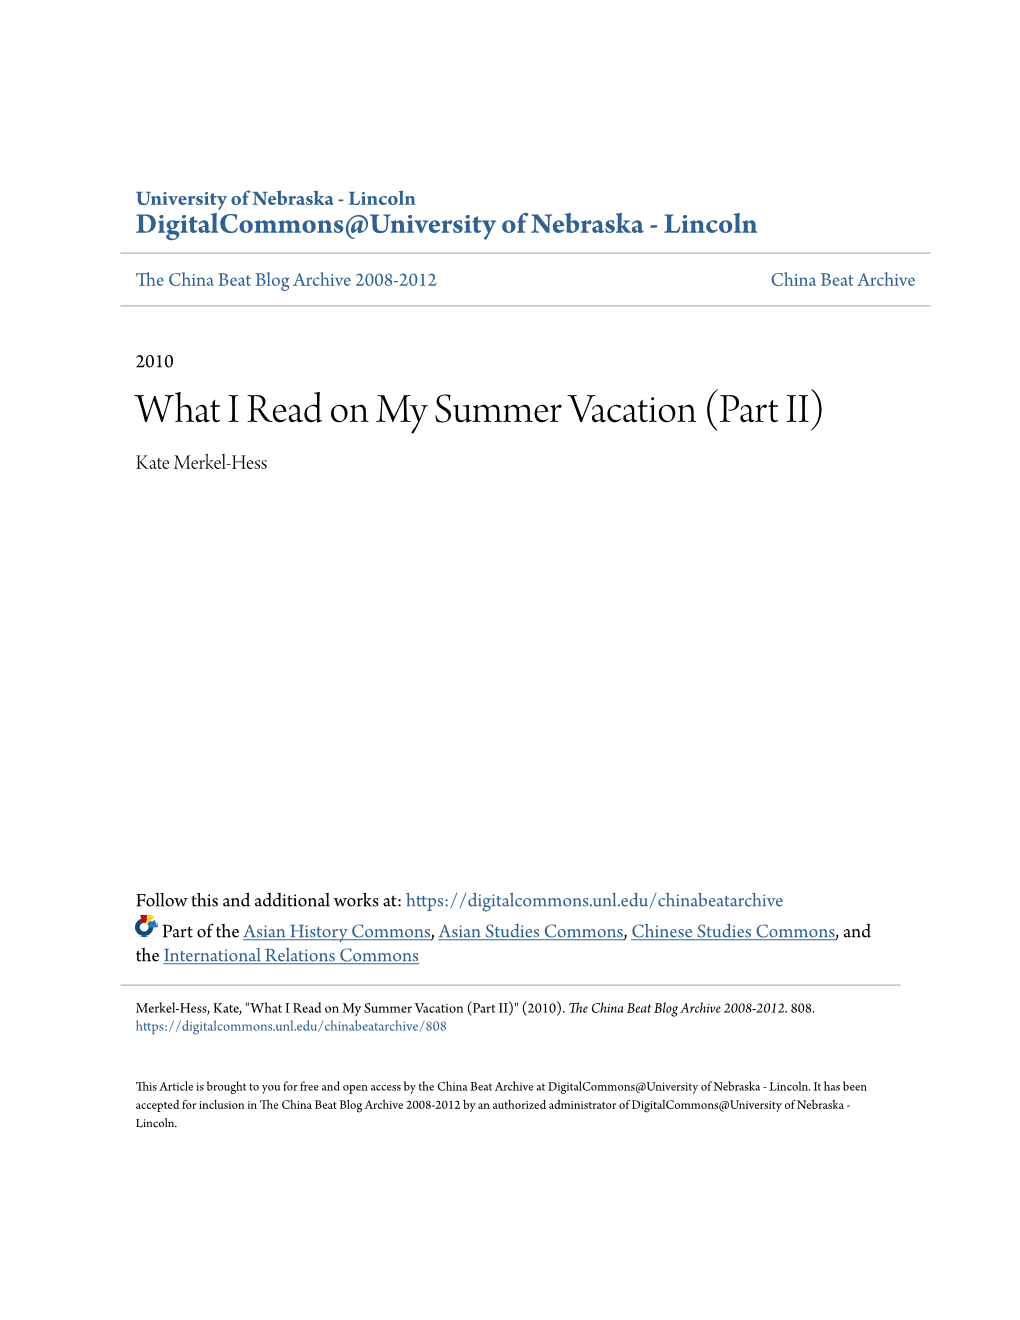 What I Read on My Summer Vacation (Part II) Kate Merkel-Hess